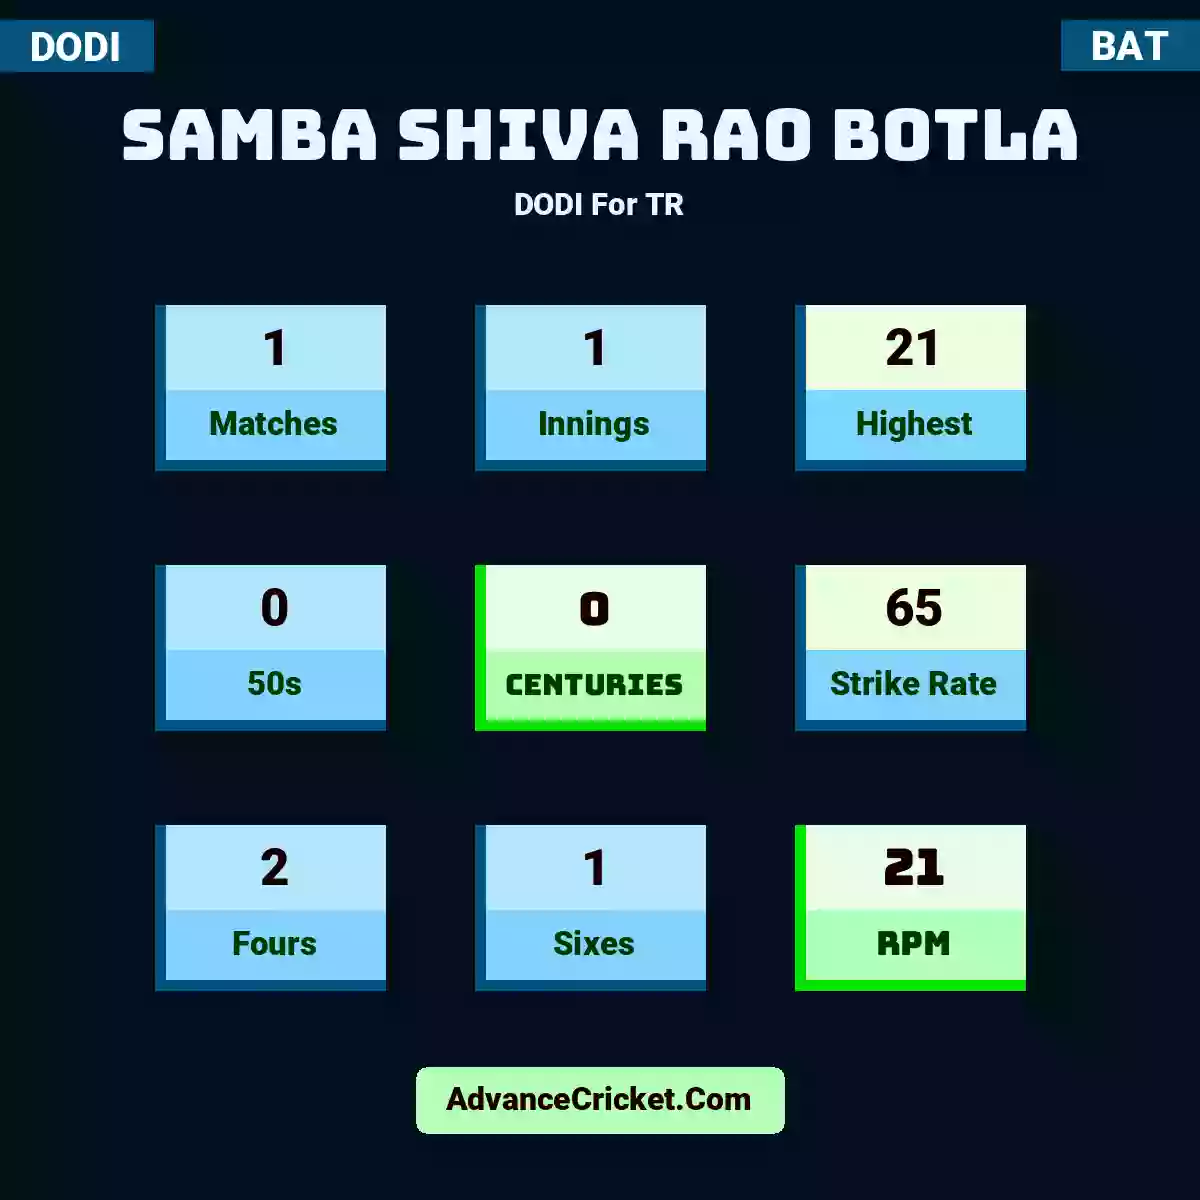 Samba Shiva Rao Botla DODI  For TR, Samba Shiva Rao Botla played 1 matches, scored 21 runs as highest, 0 half-centuries, and 0 centuries, with a strike rate of 65. S.Shiva.Rao.Botla hit 2 fours and 1 sixes, with an RPM of 21.